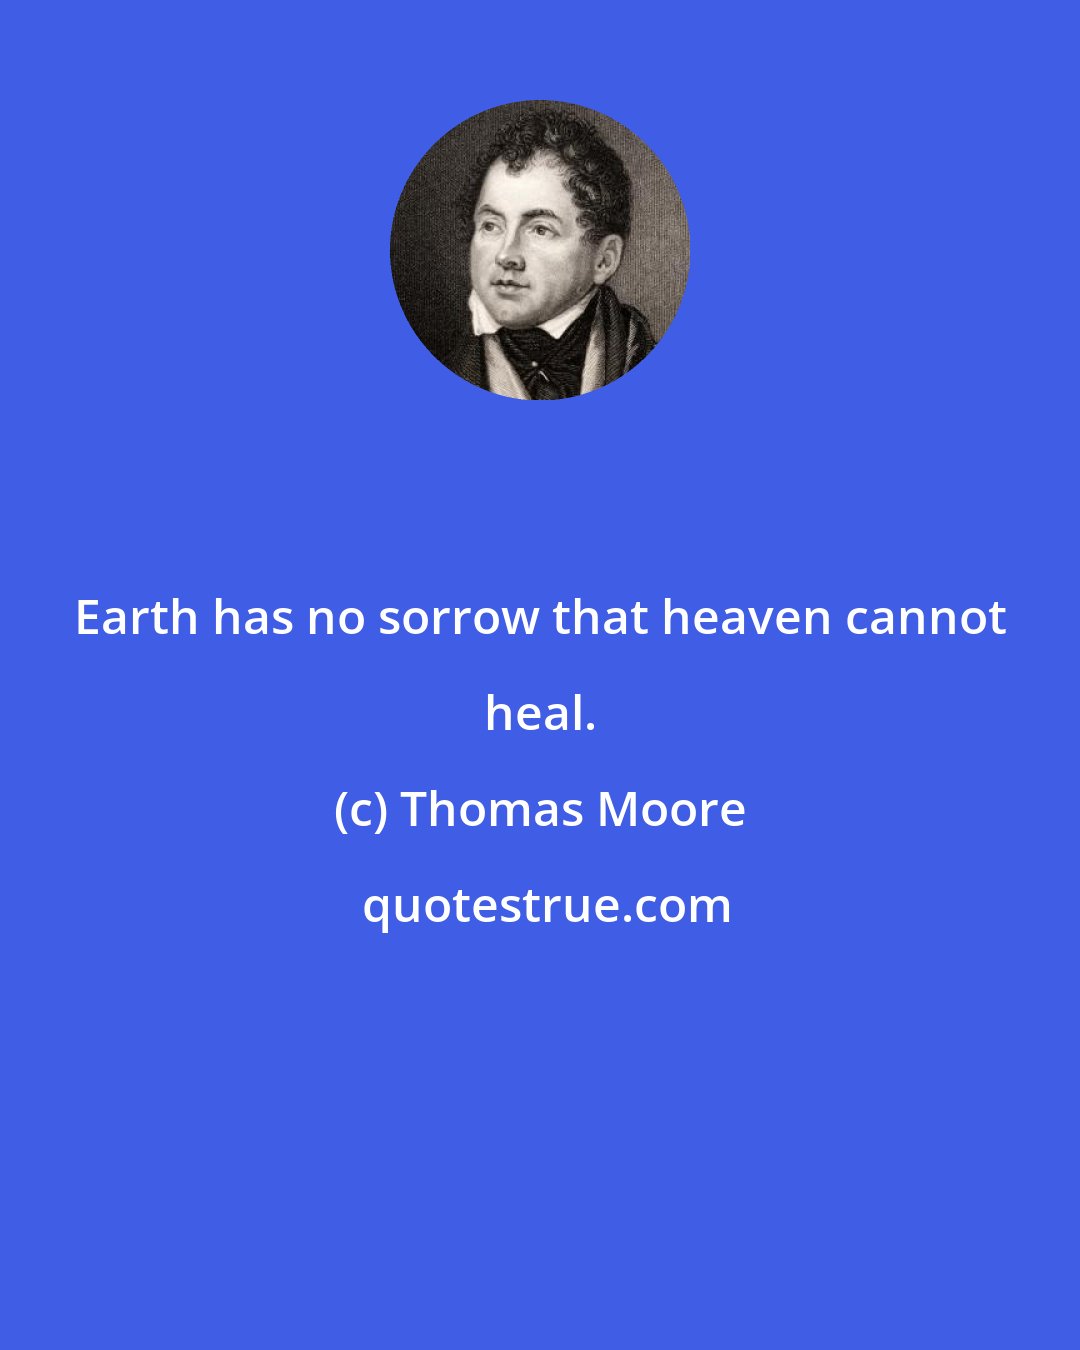 Thomas Moore: Earth has no sorrow that heaven cannot heal.